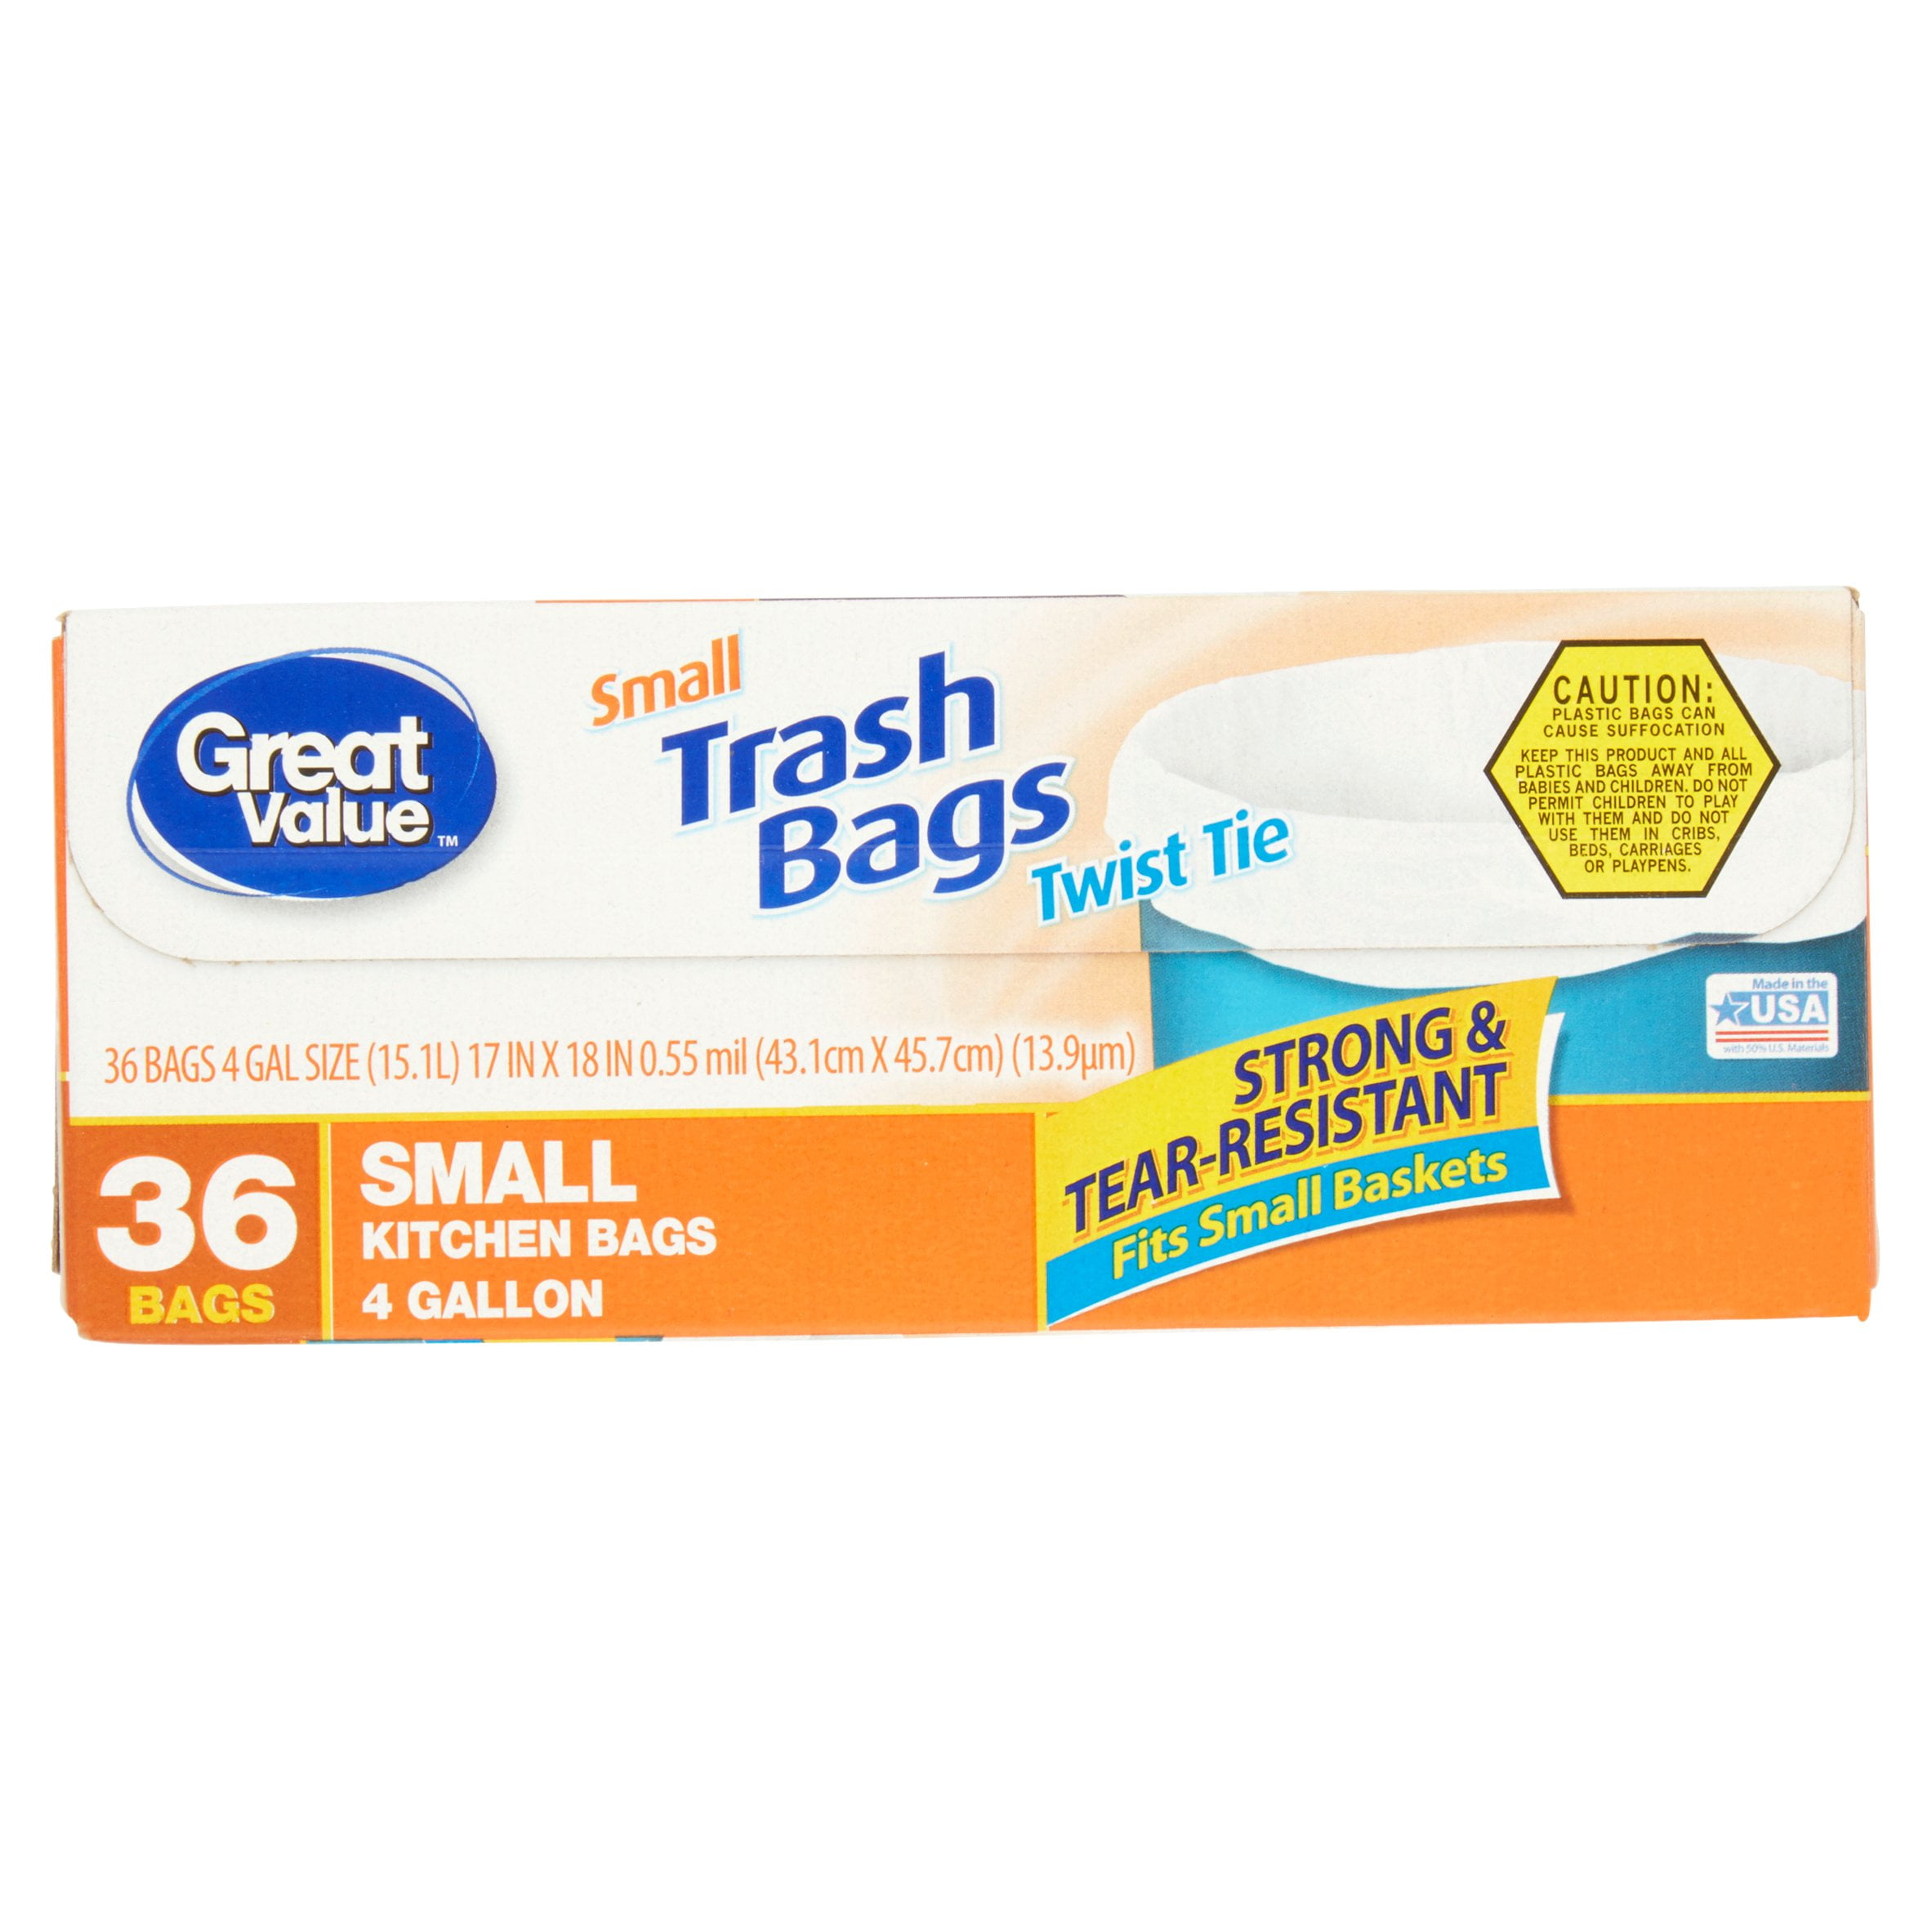 Best Choice Bst Ch Small Garbage Bag 4 Gallon Twist Tie, Trash Bags